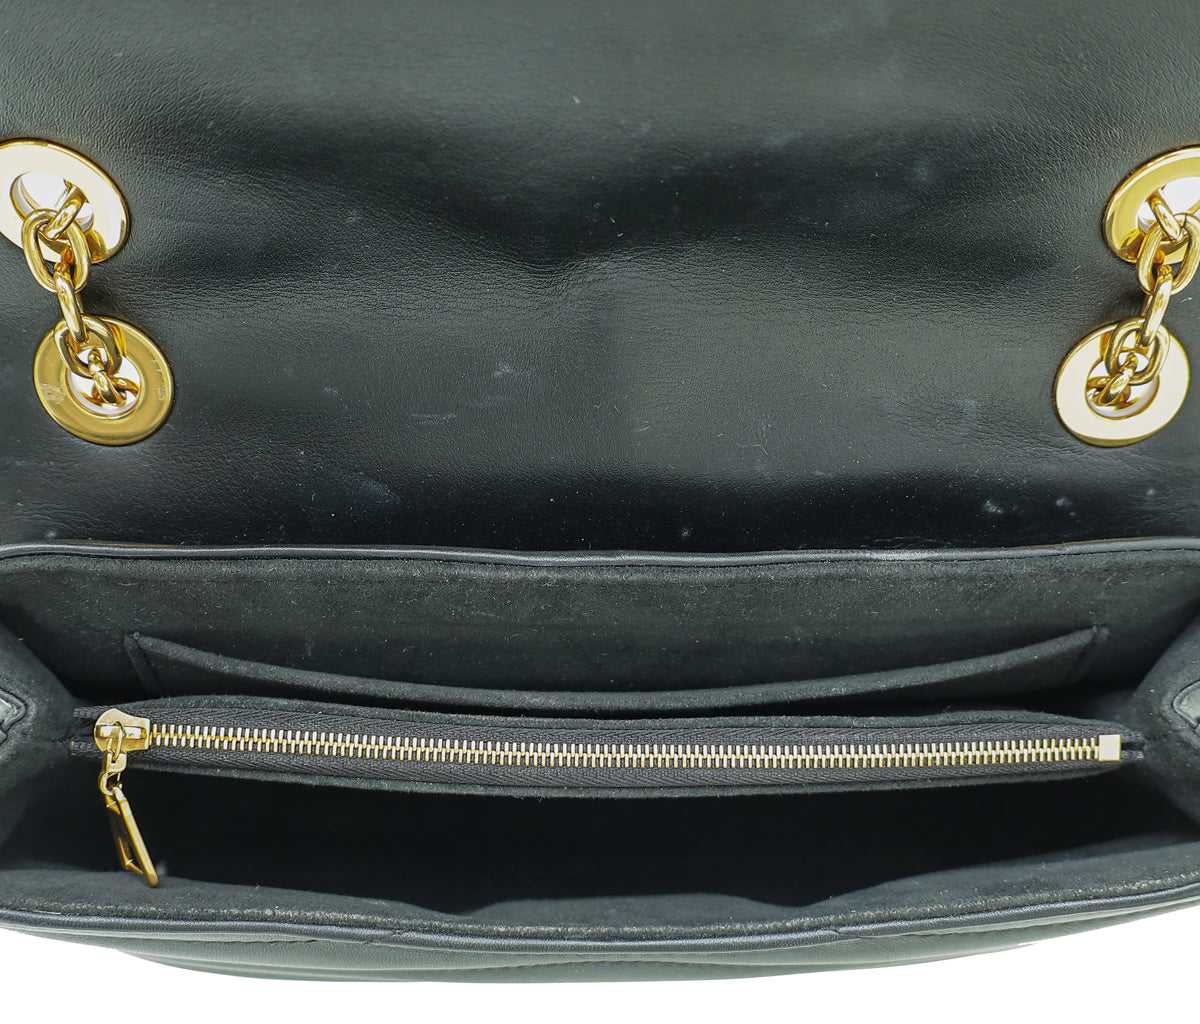 Louis Vuitton Black New Wave Chain Bag